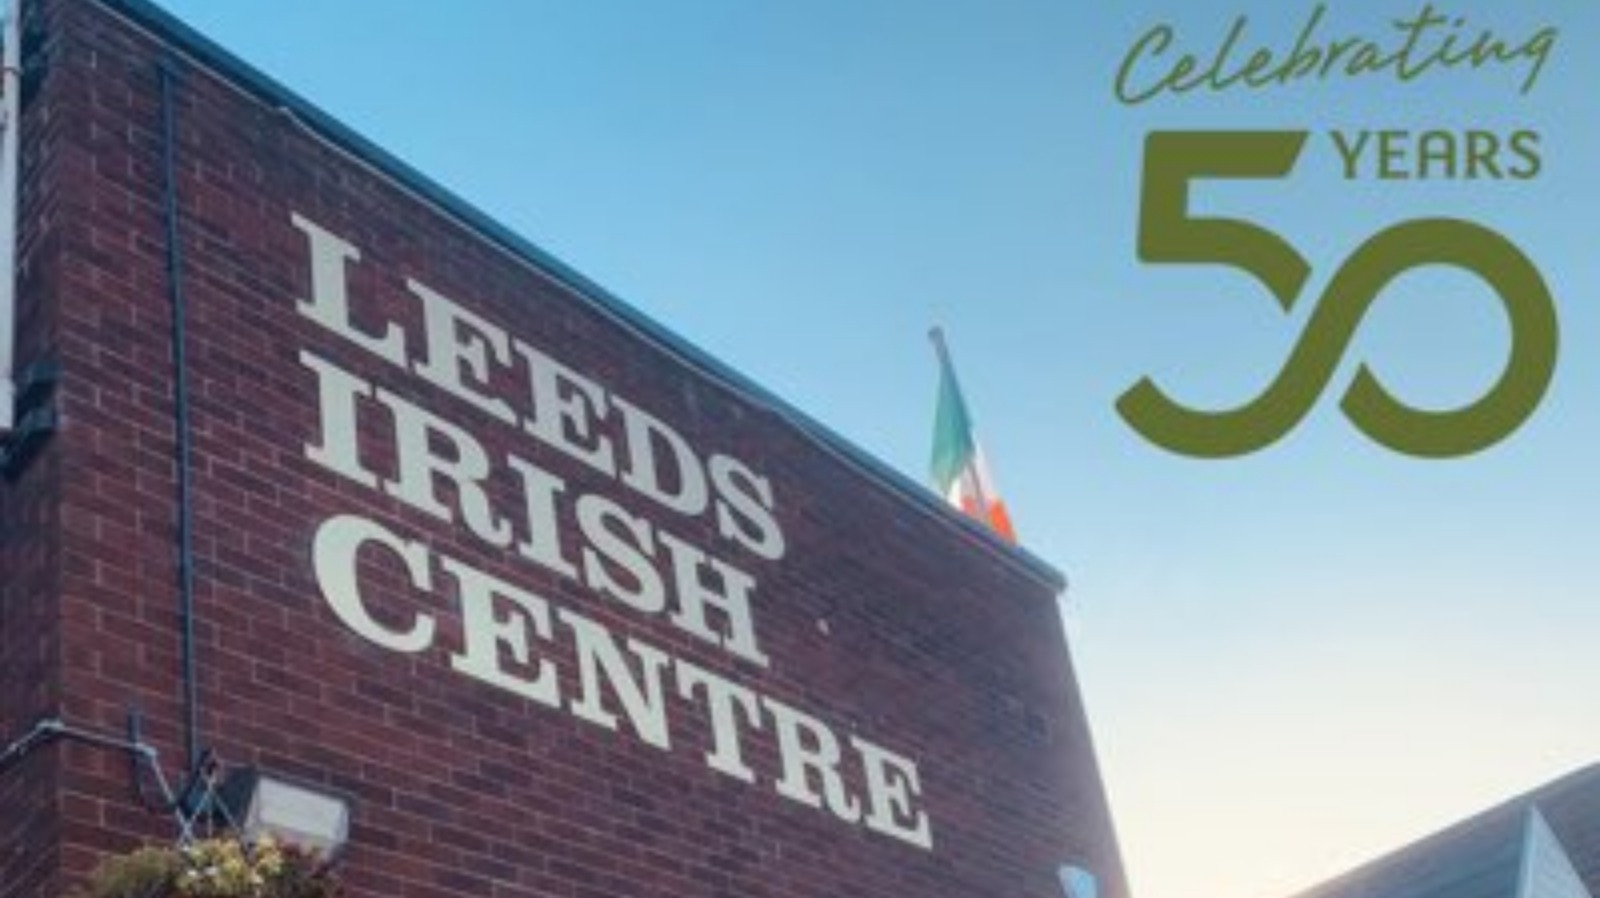 Leeds Irish Centre 50th anniversary celebrations get underway ITV